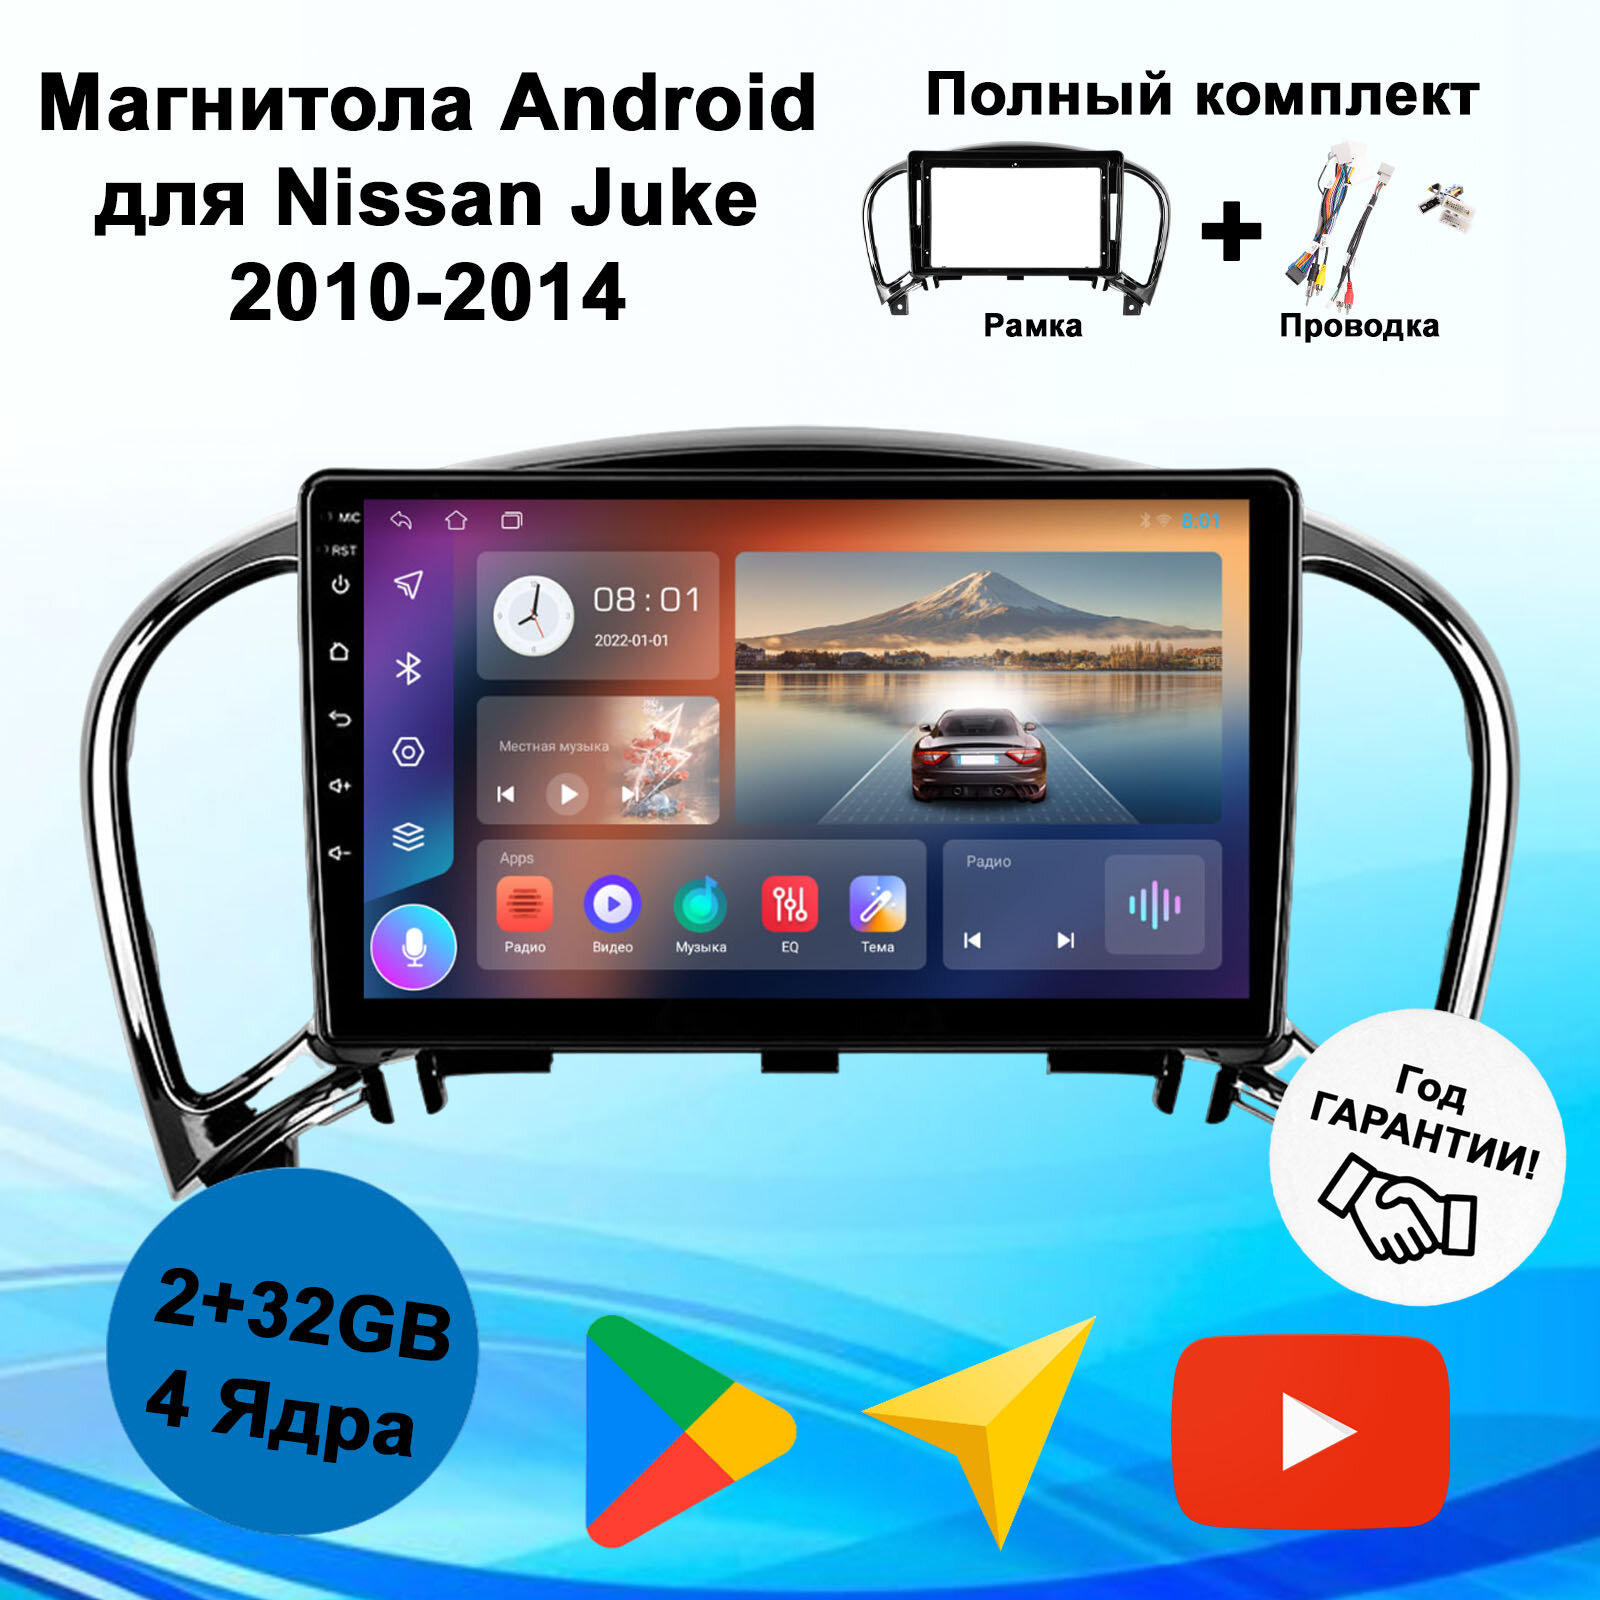 Магнитола Андроид для Nissan Juke 2010-2014 2+32Gb (Android/Wi-FI/Bluetooh/2DIN/Штатная магнитола/Головное устройство/Автомагнитола